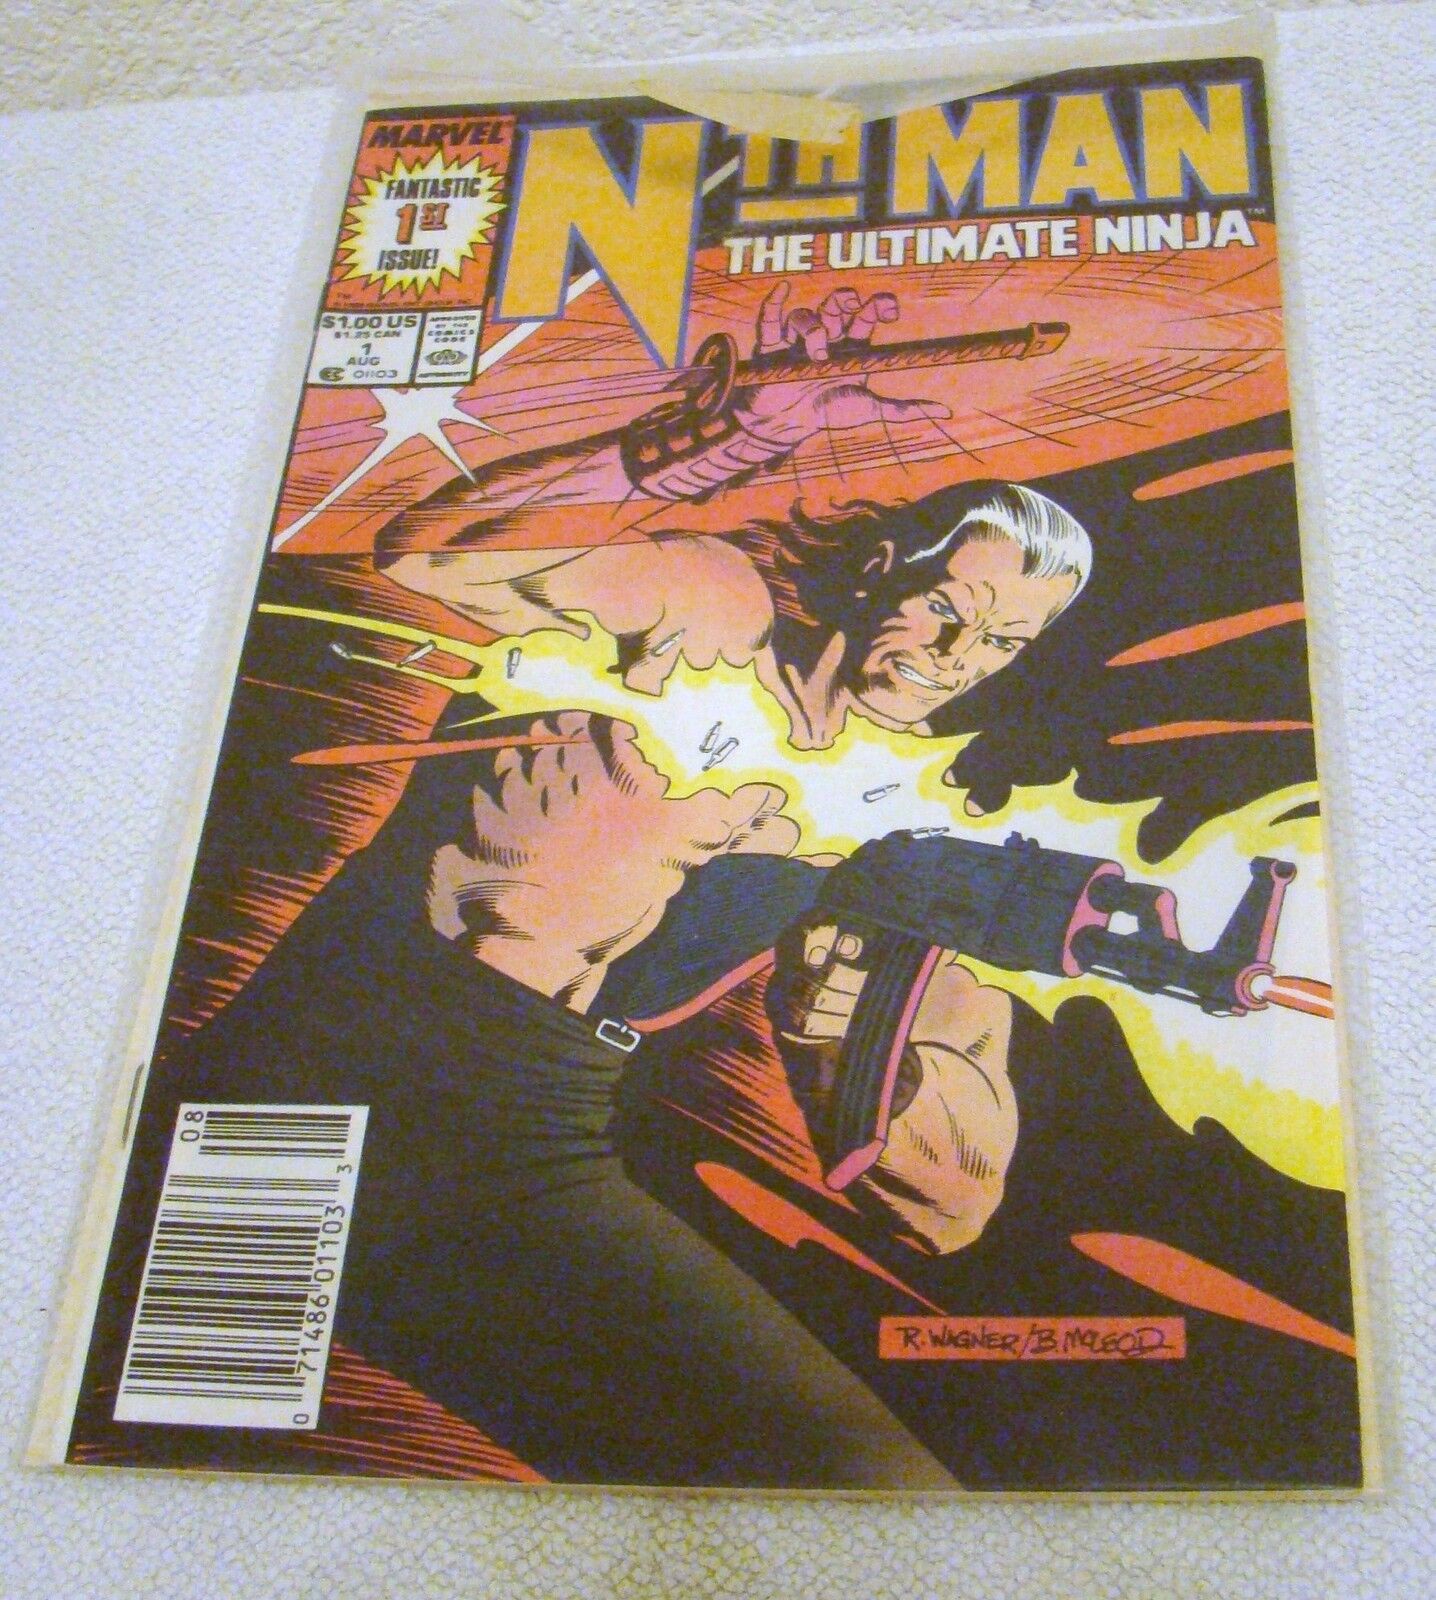 Marvel Comics Nth Man #1 August 1989 The Ultimate Ninja Collectible Comic Book